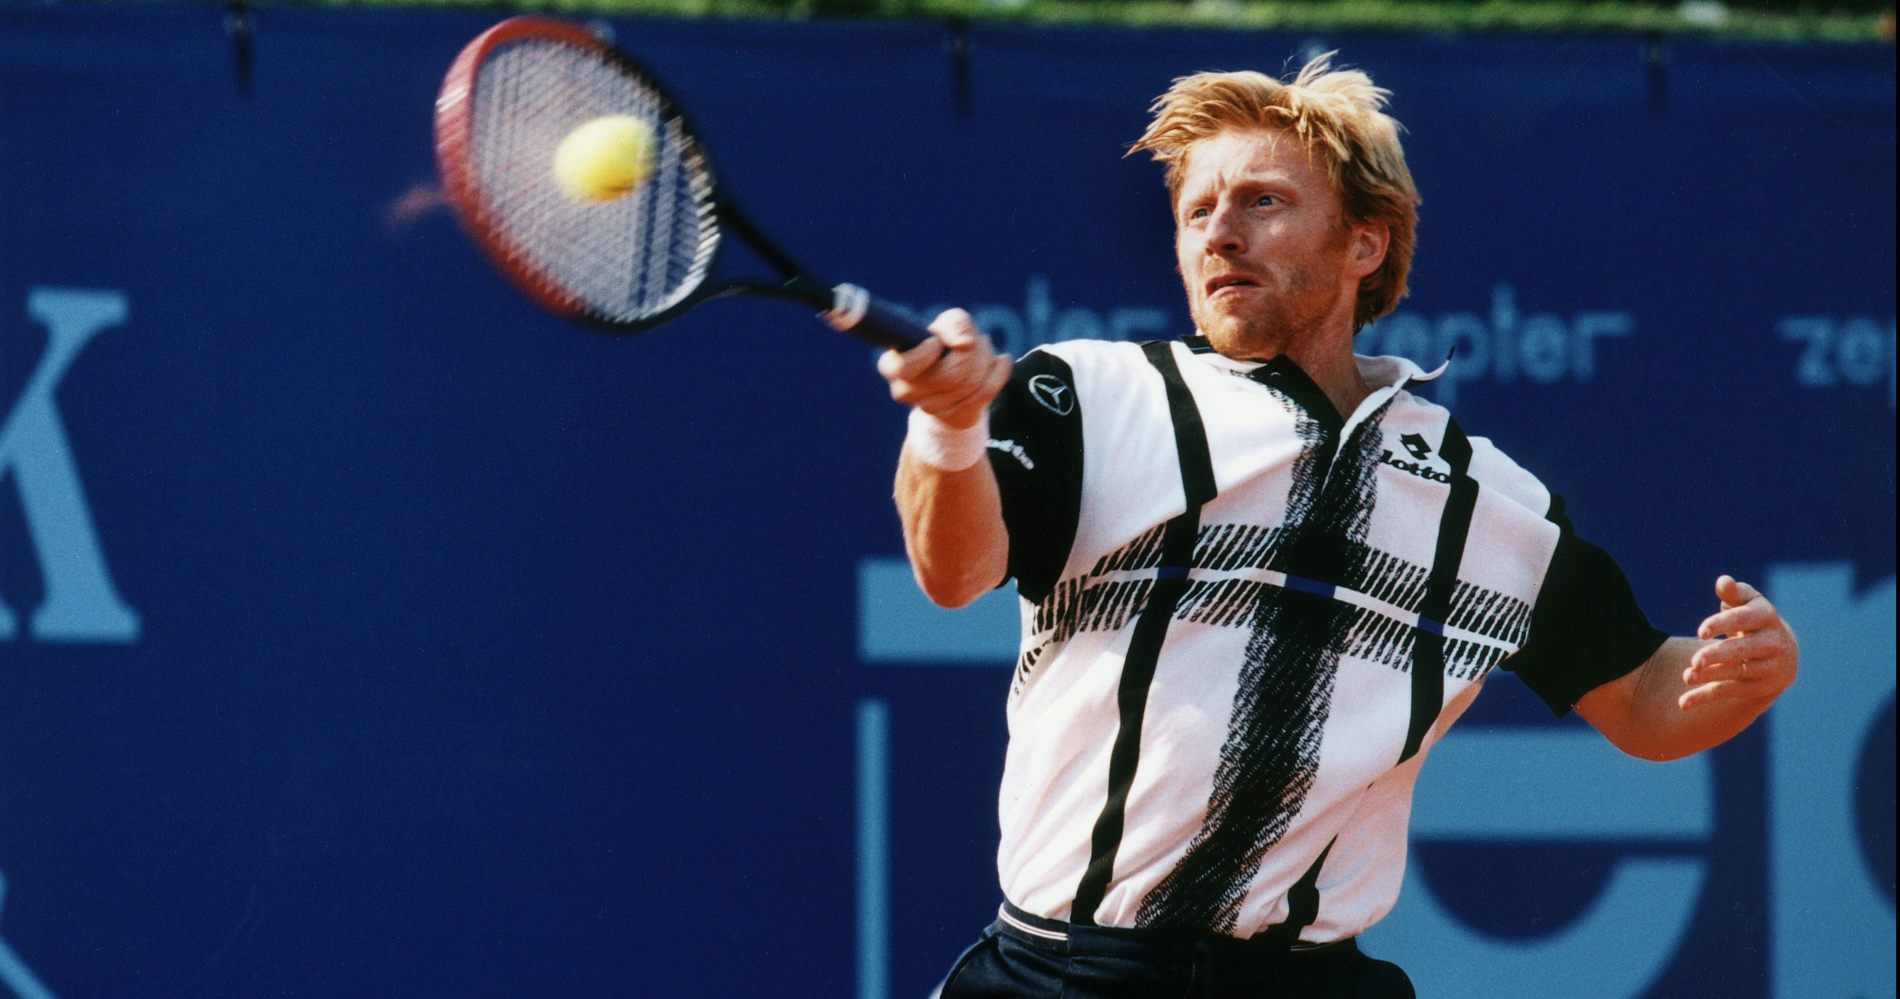 Boris Becker - On this day